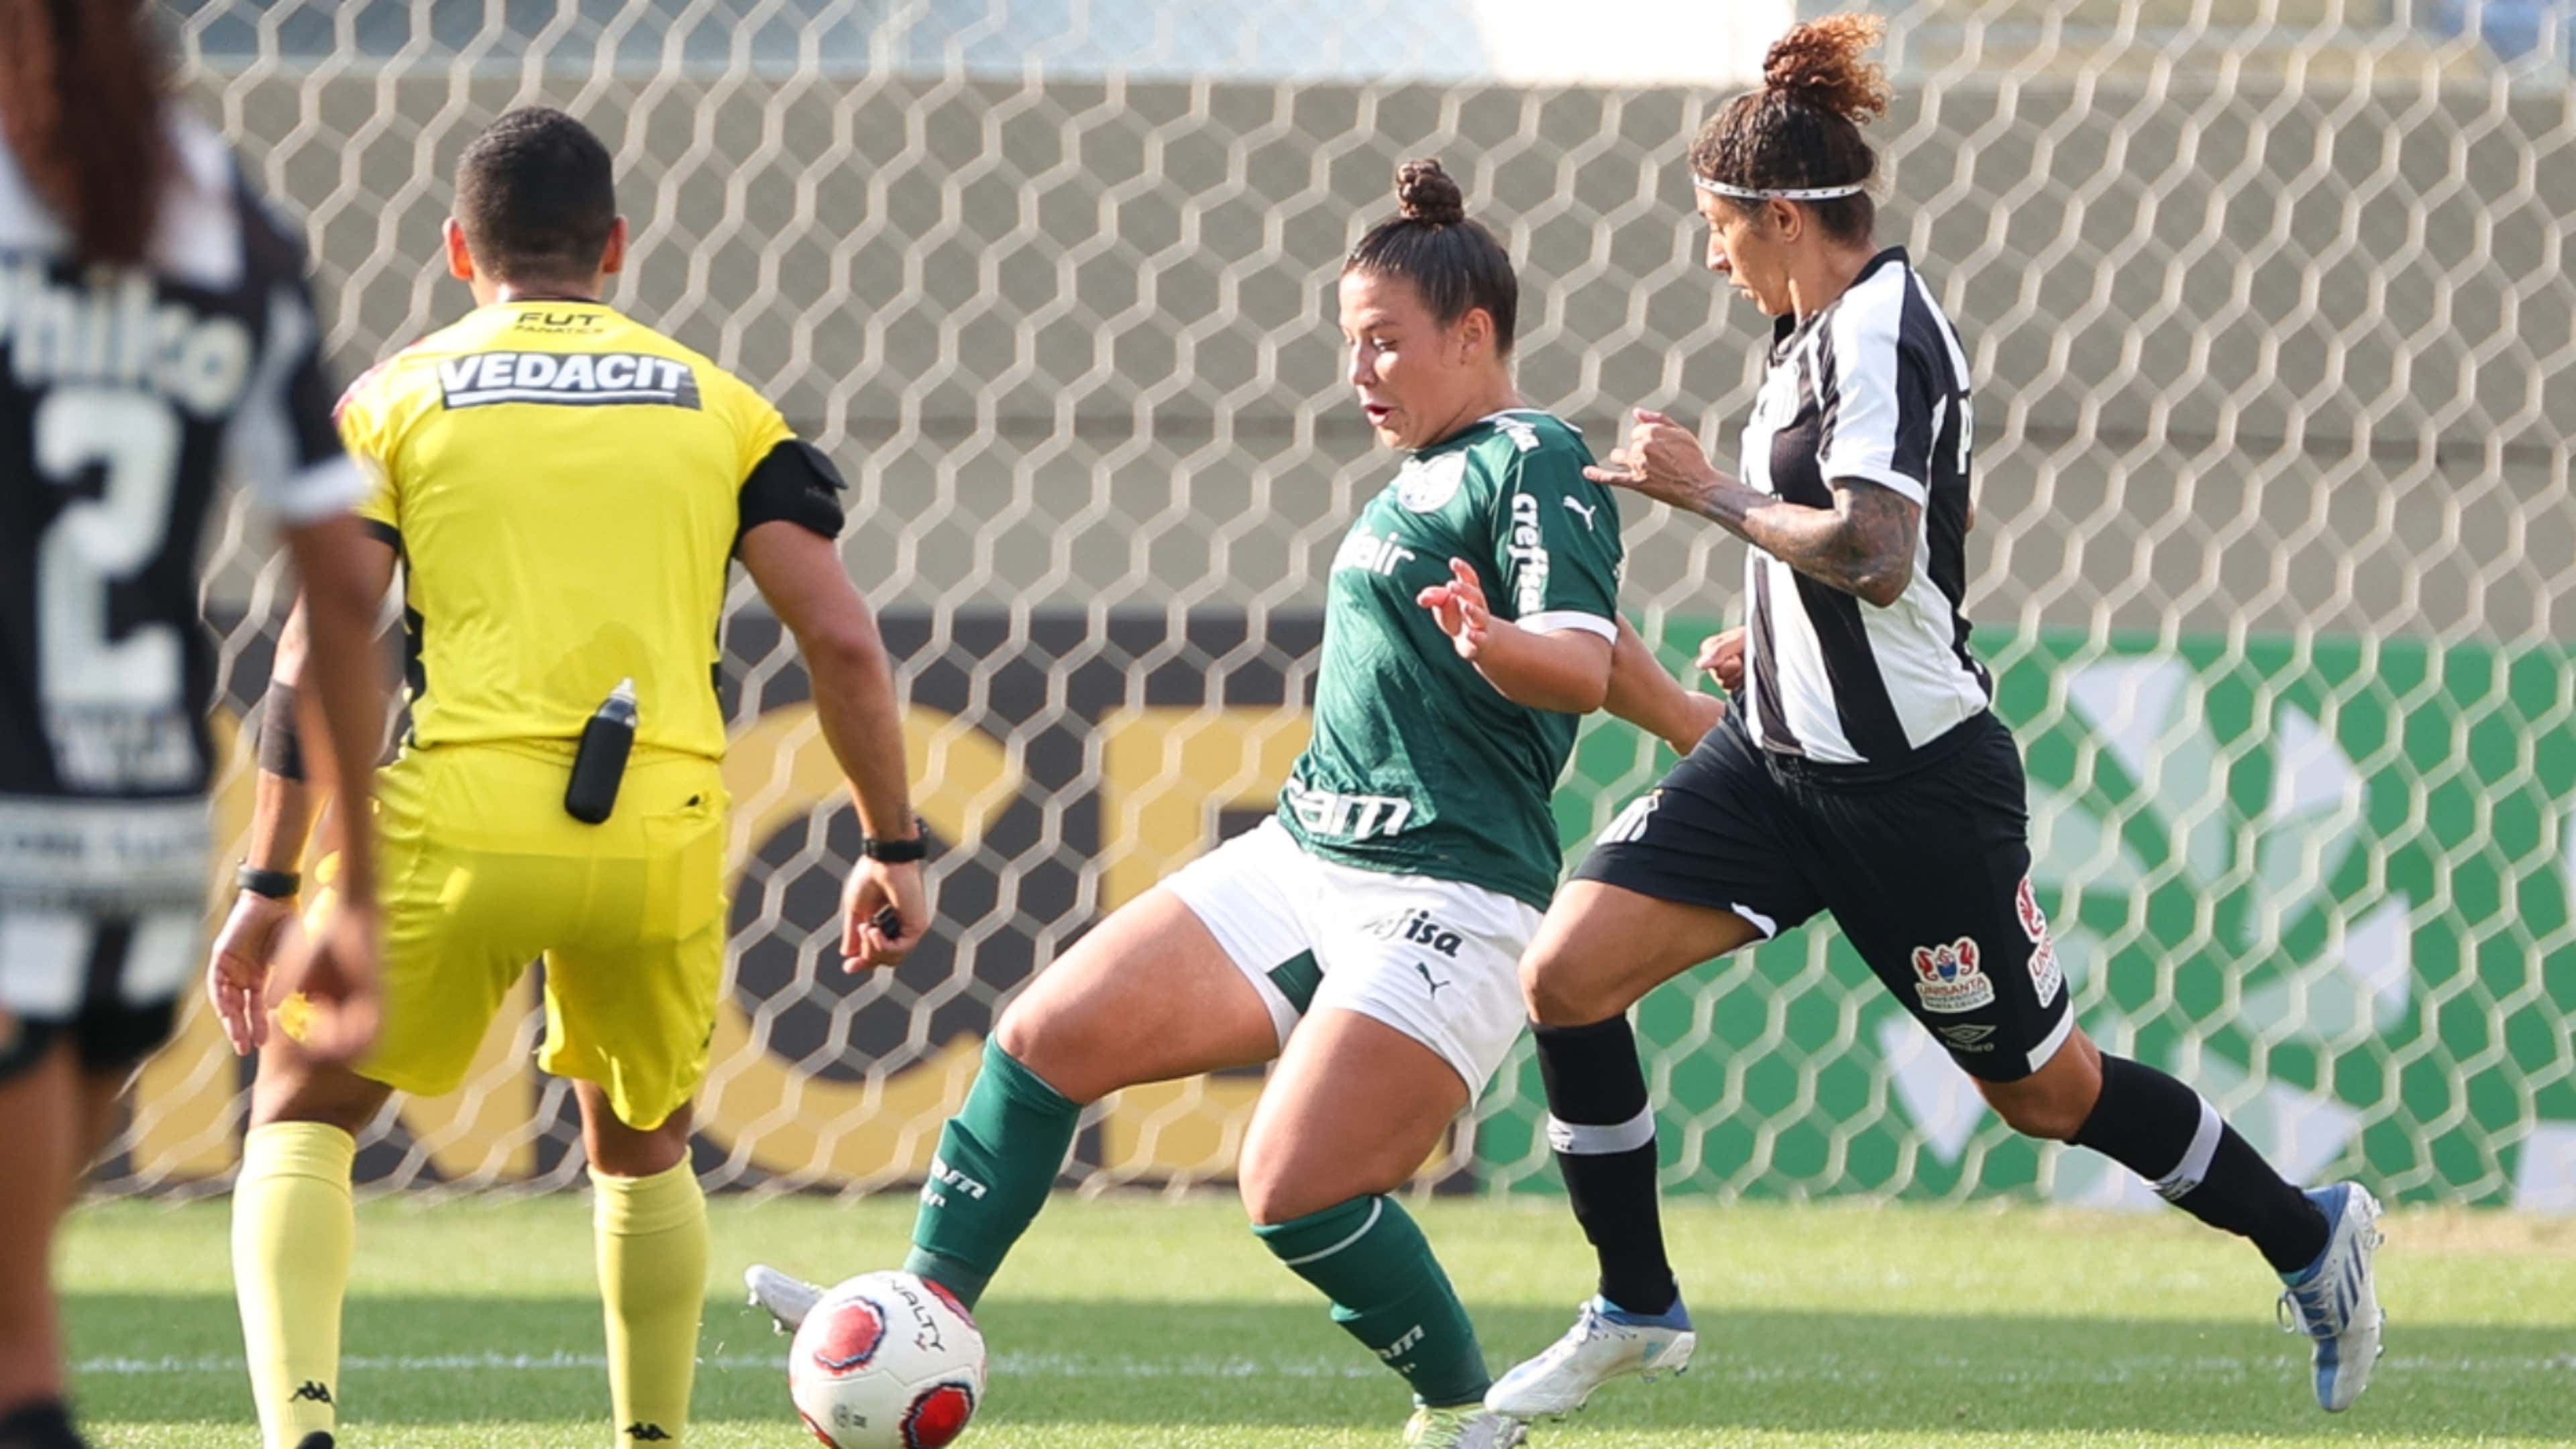 Paulista Feminino: Palmeiras x Santos (21/12/2022)